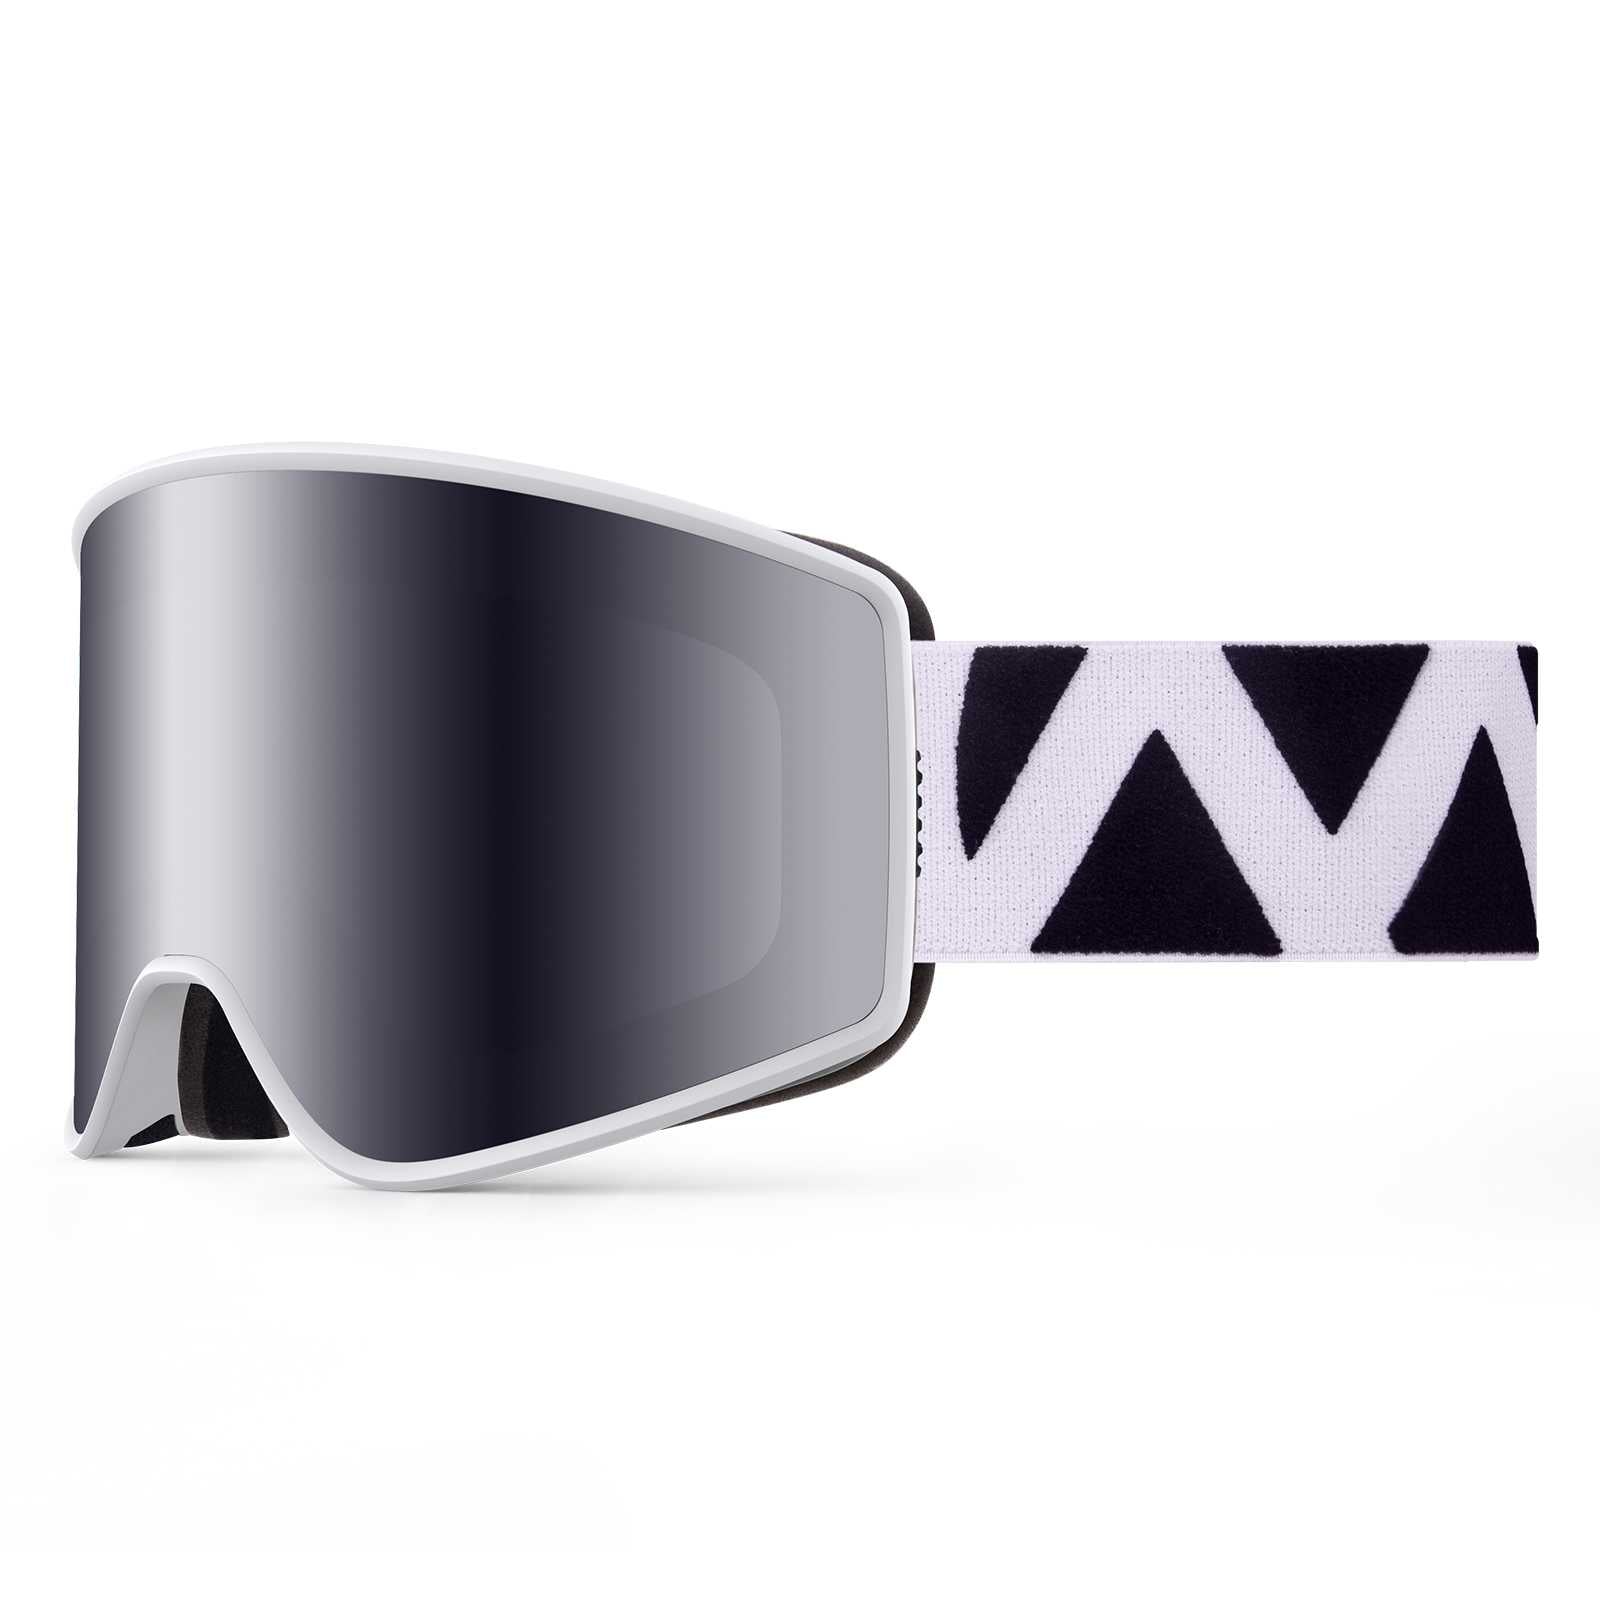 cylindrical lens ski goggles